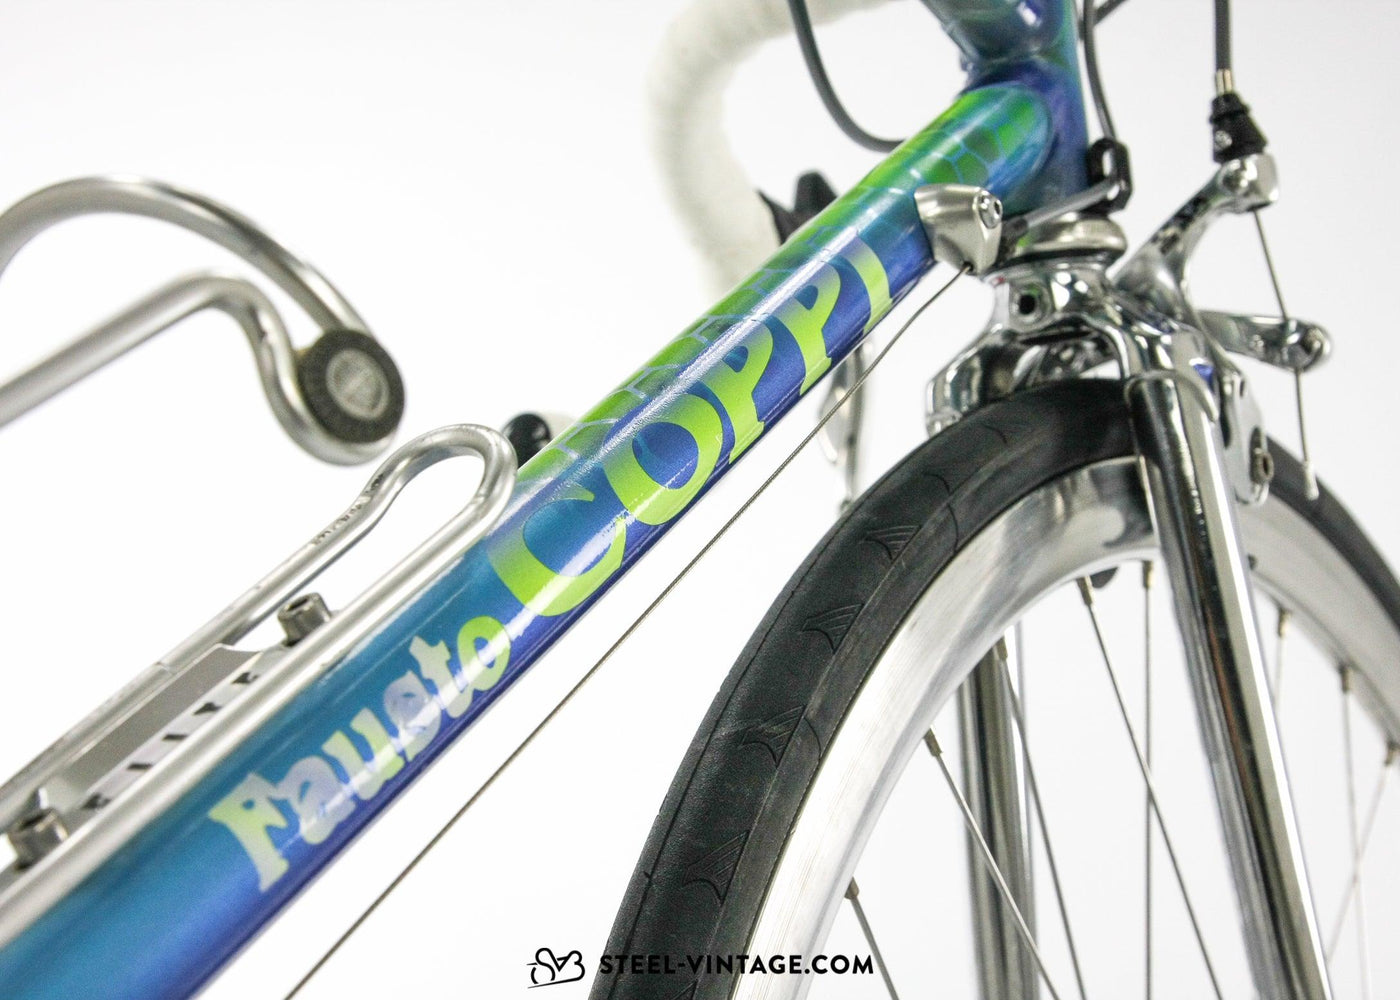 Fausto Coppi New Success Classic Racing Bike 1993 - Steel Vintage Bikes